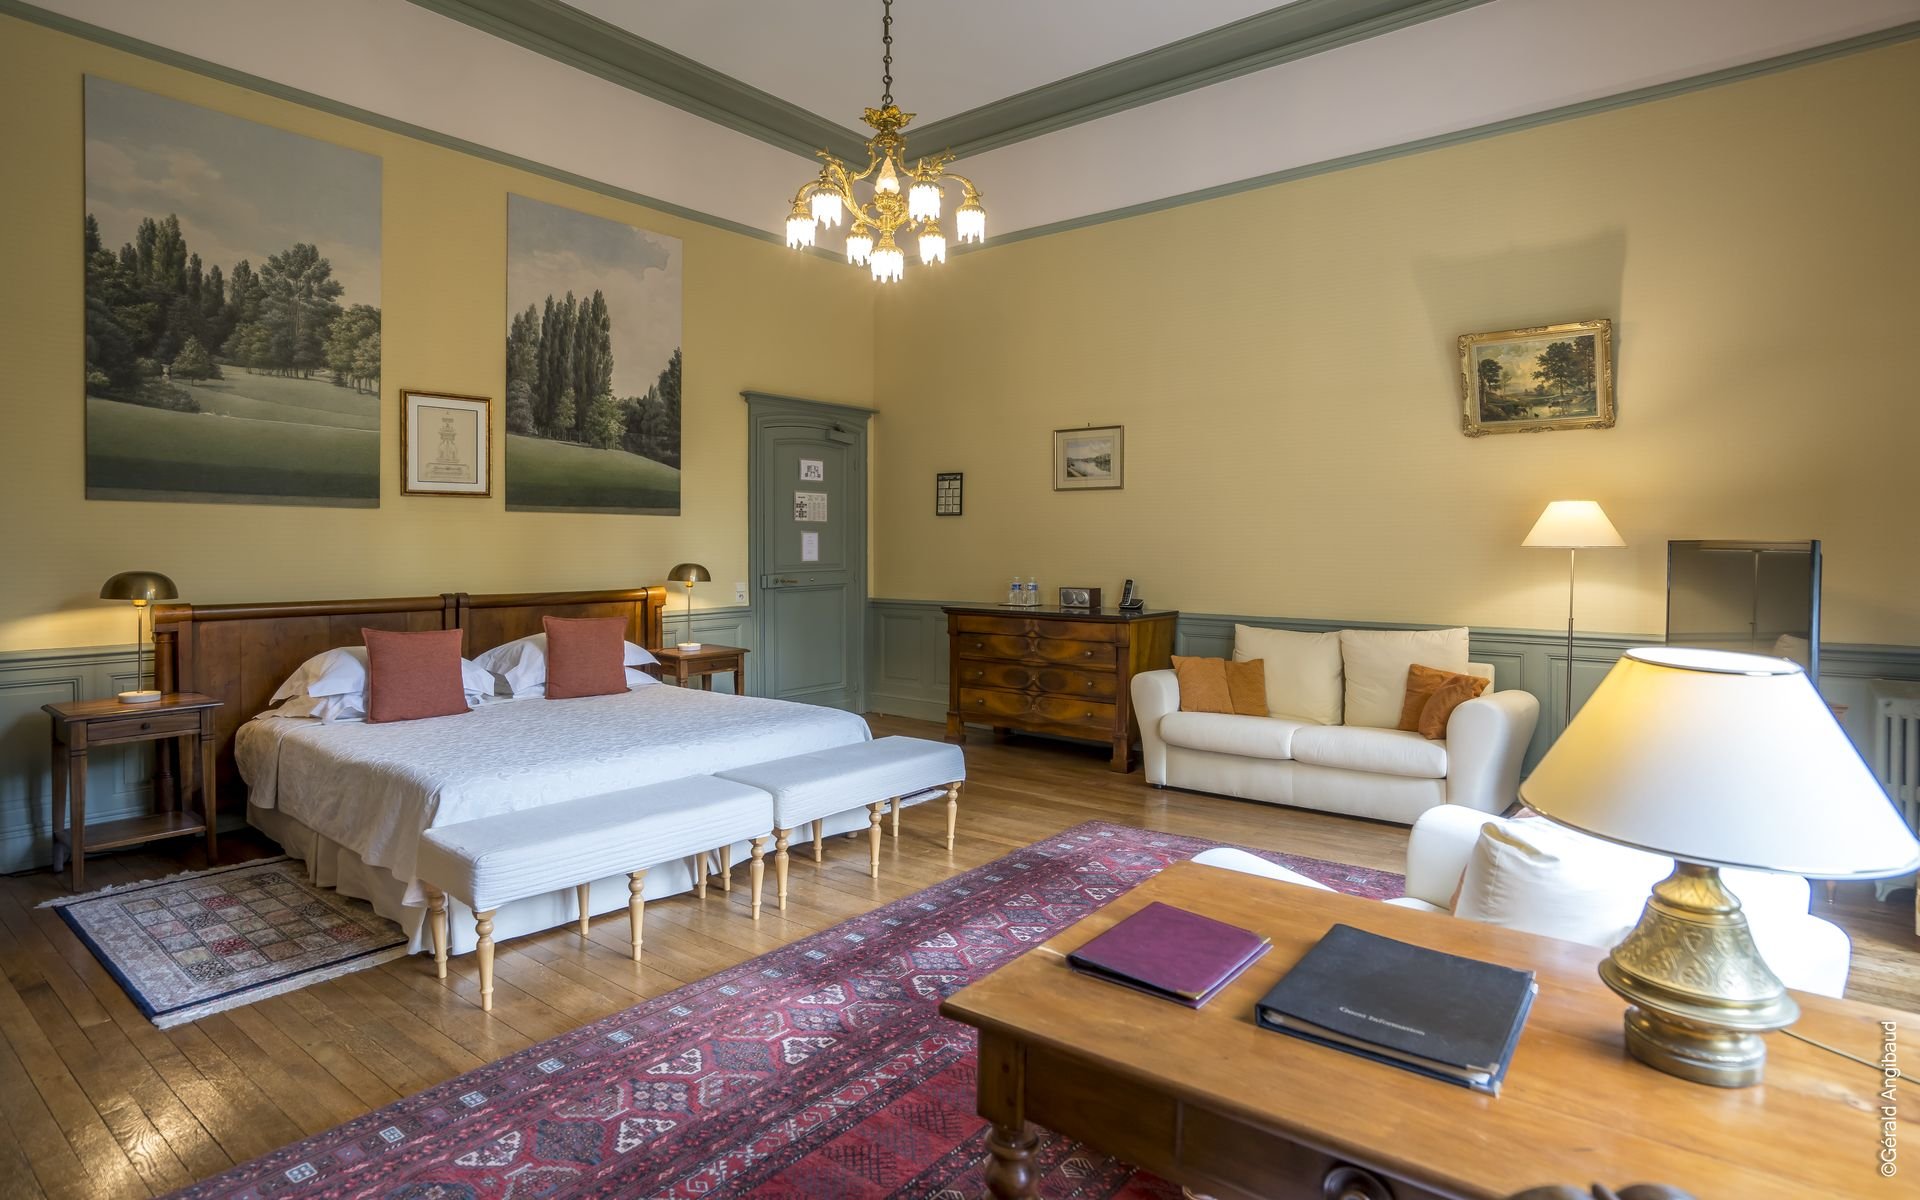 127/chambres/Junior suites/I1060-_Chateau_de_Verrieres_2021_Chambres014-_resultat-2.jpg